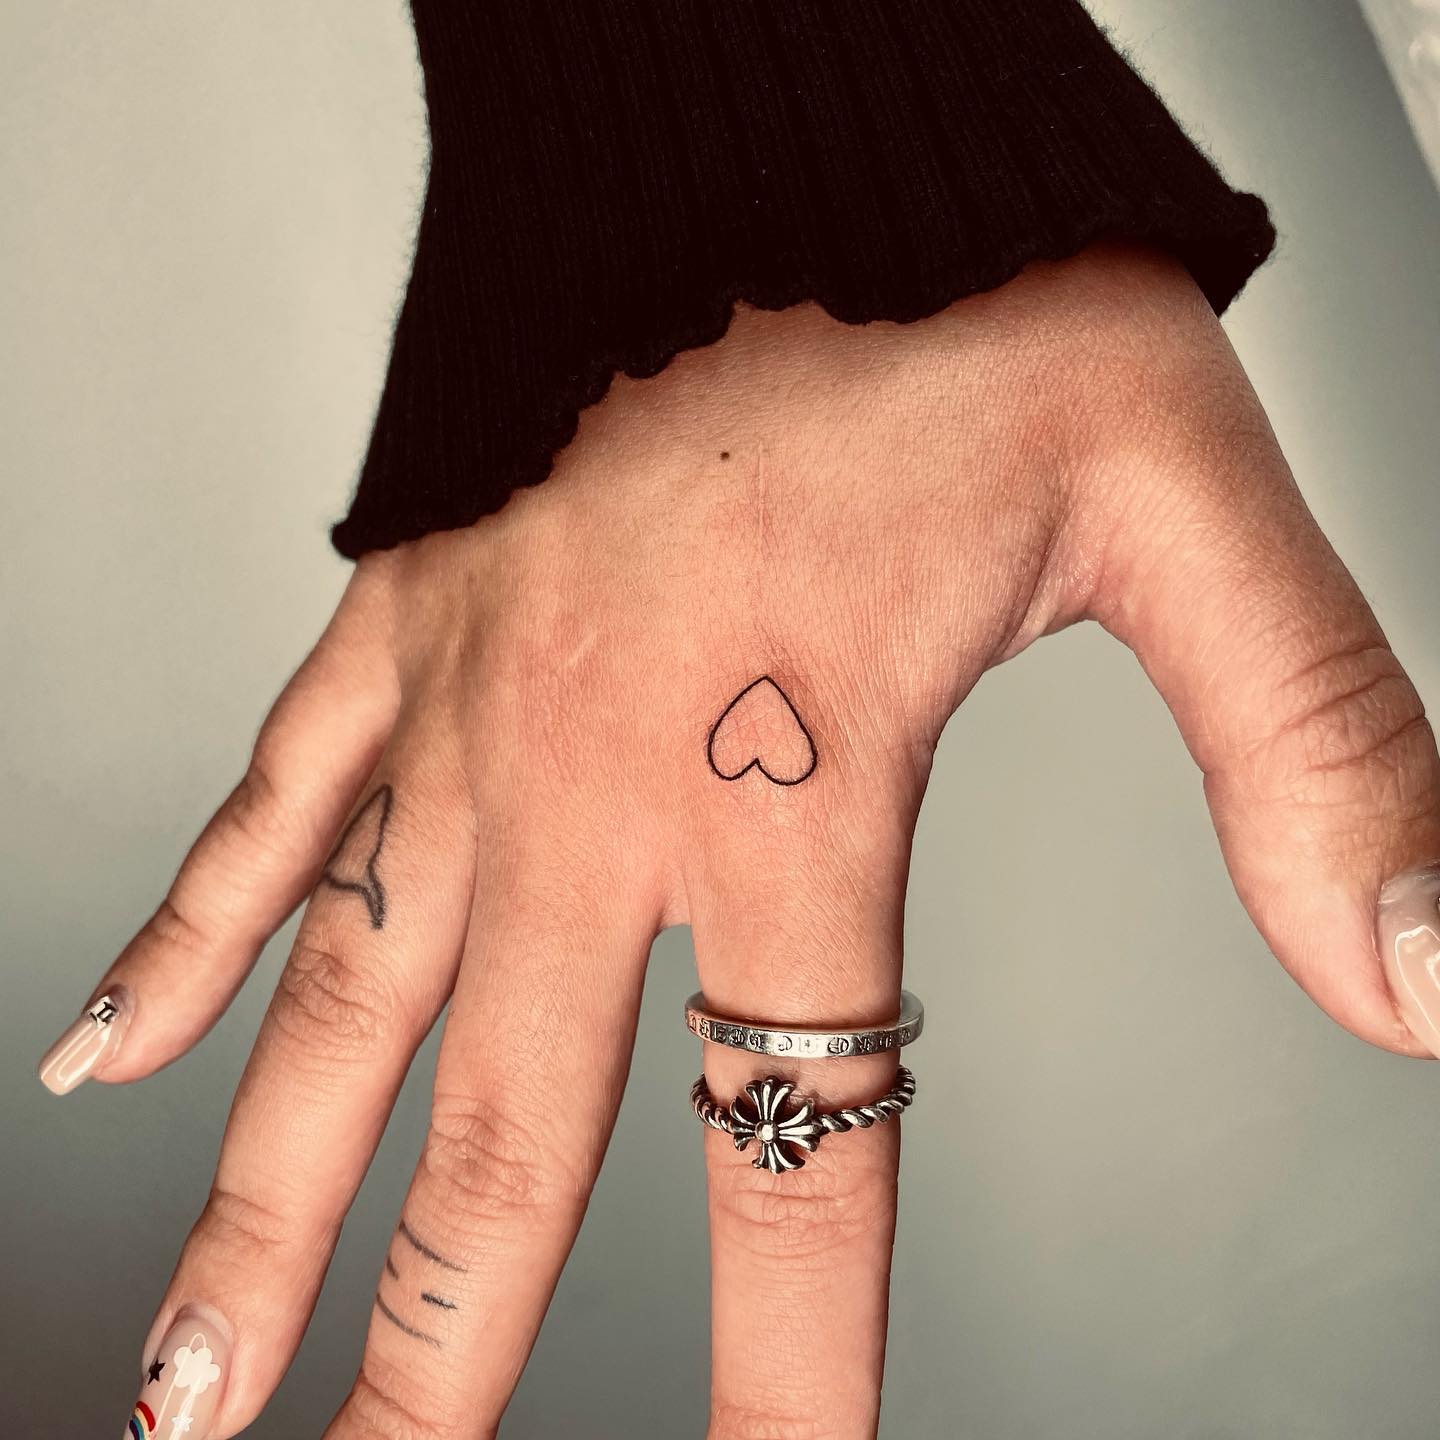 Tiny Heart Tattoo on Index Finger